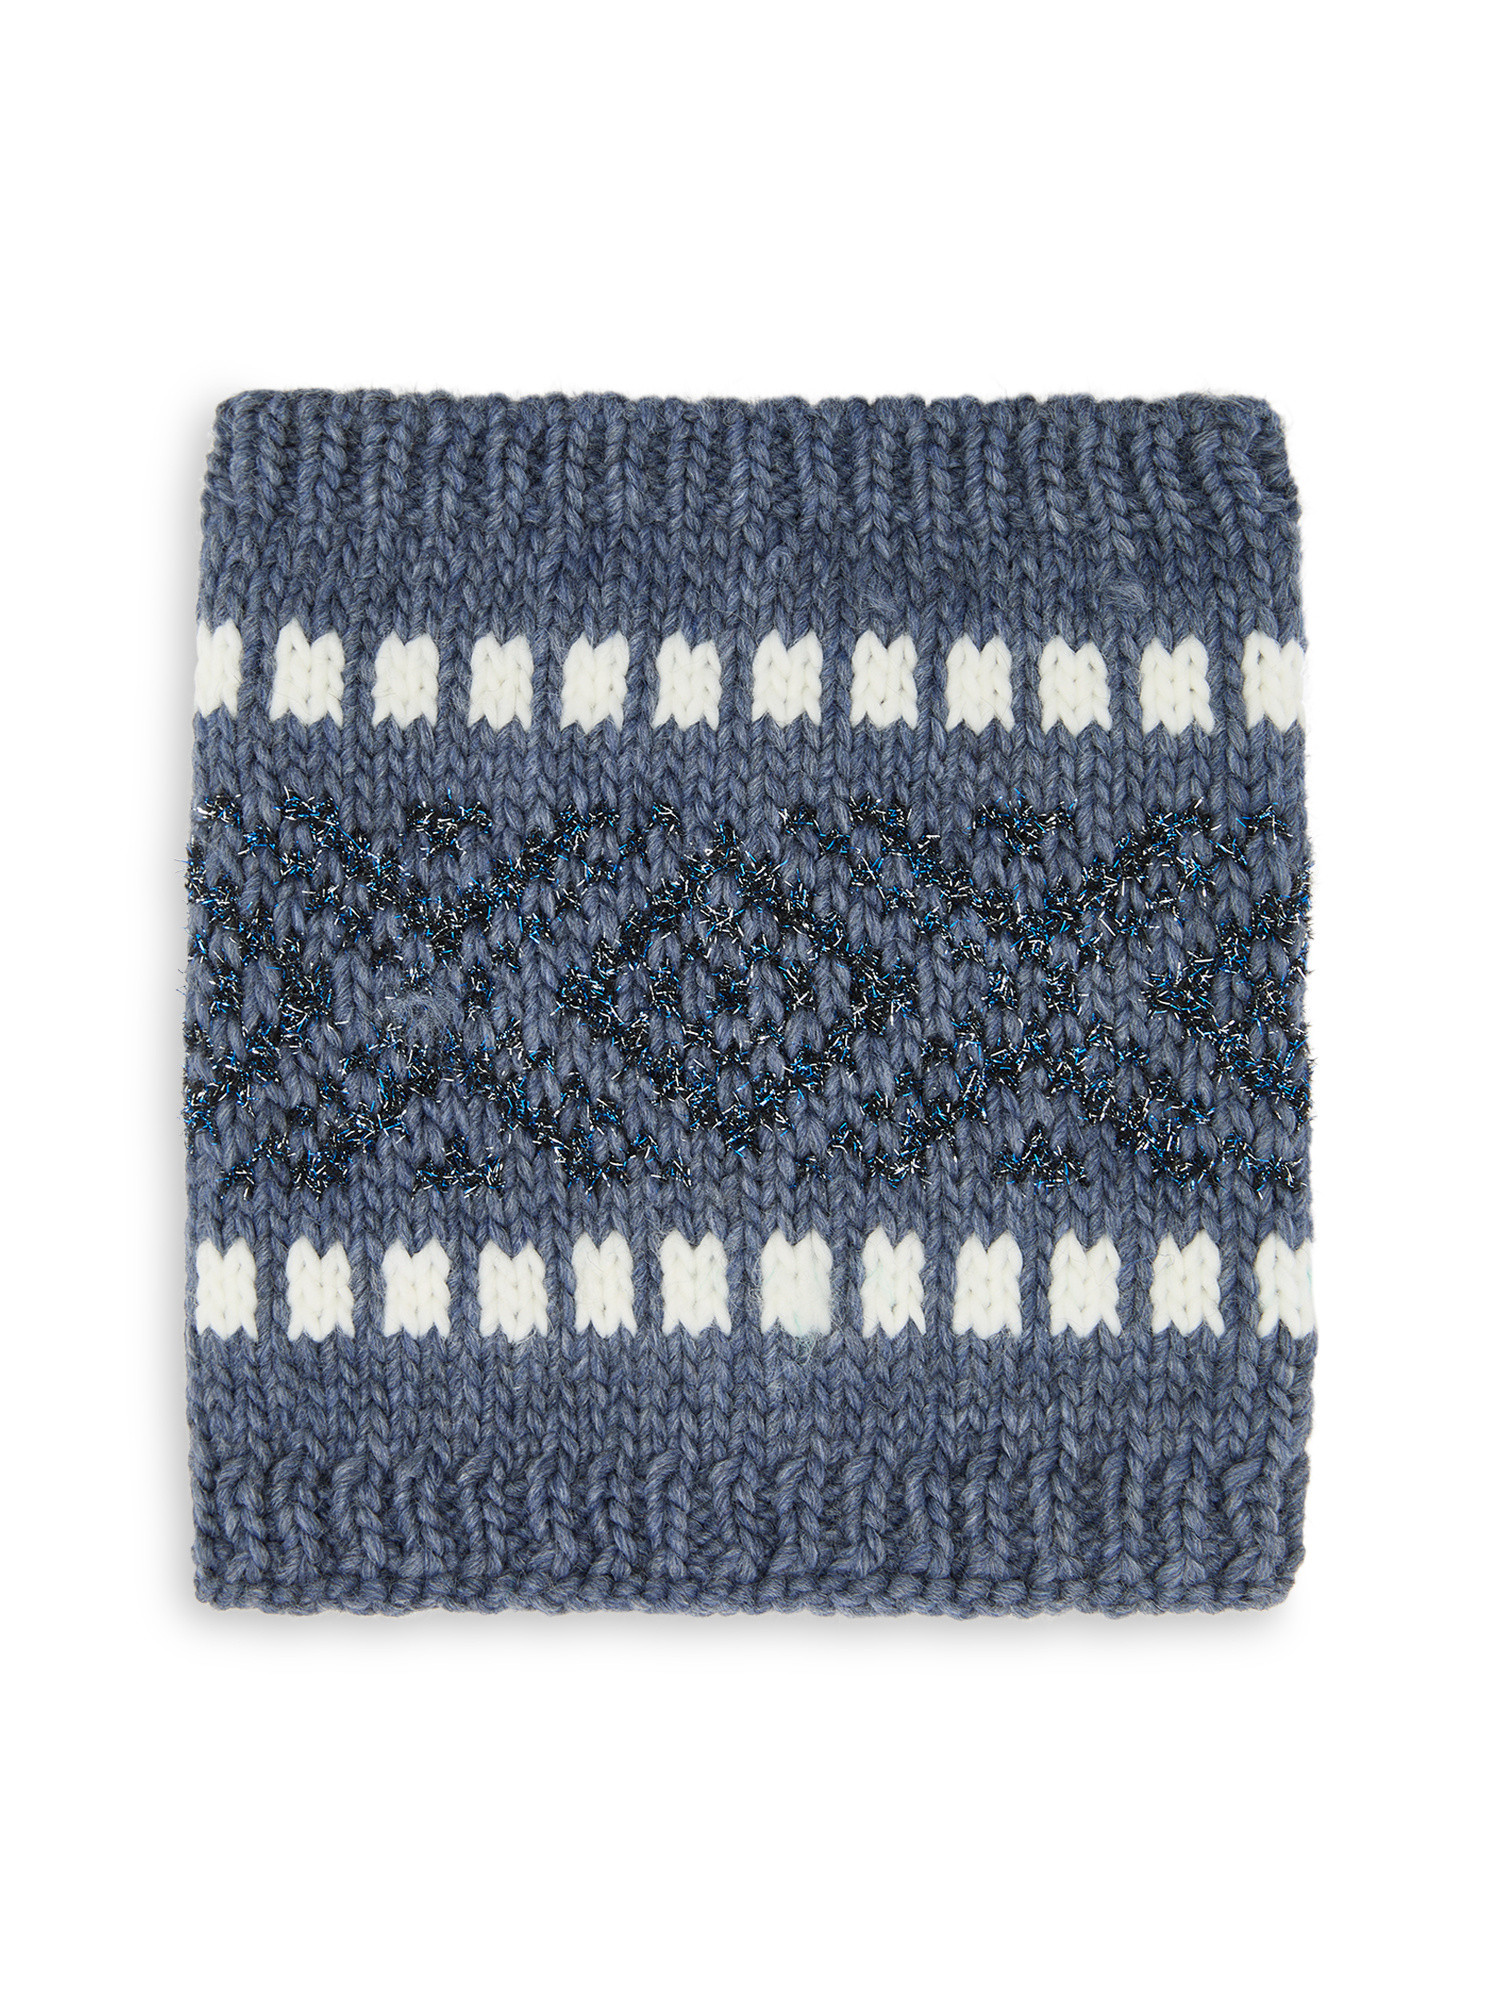 Koan - Knitted neck warmer, Blue, large image number 0